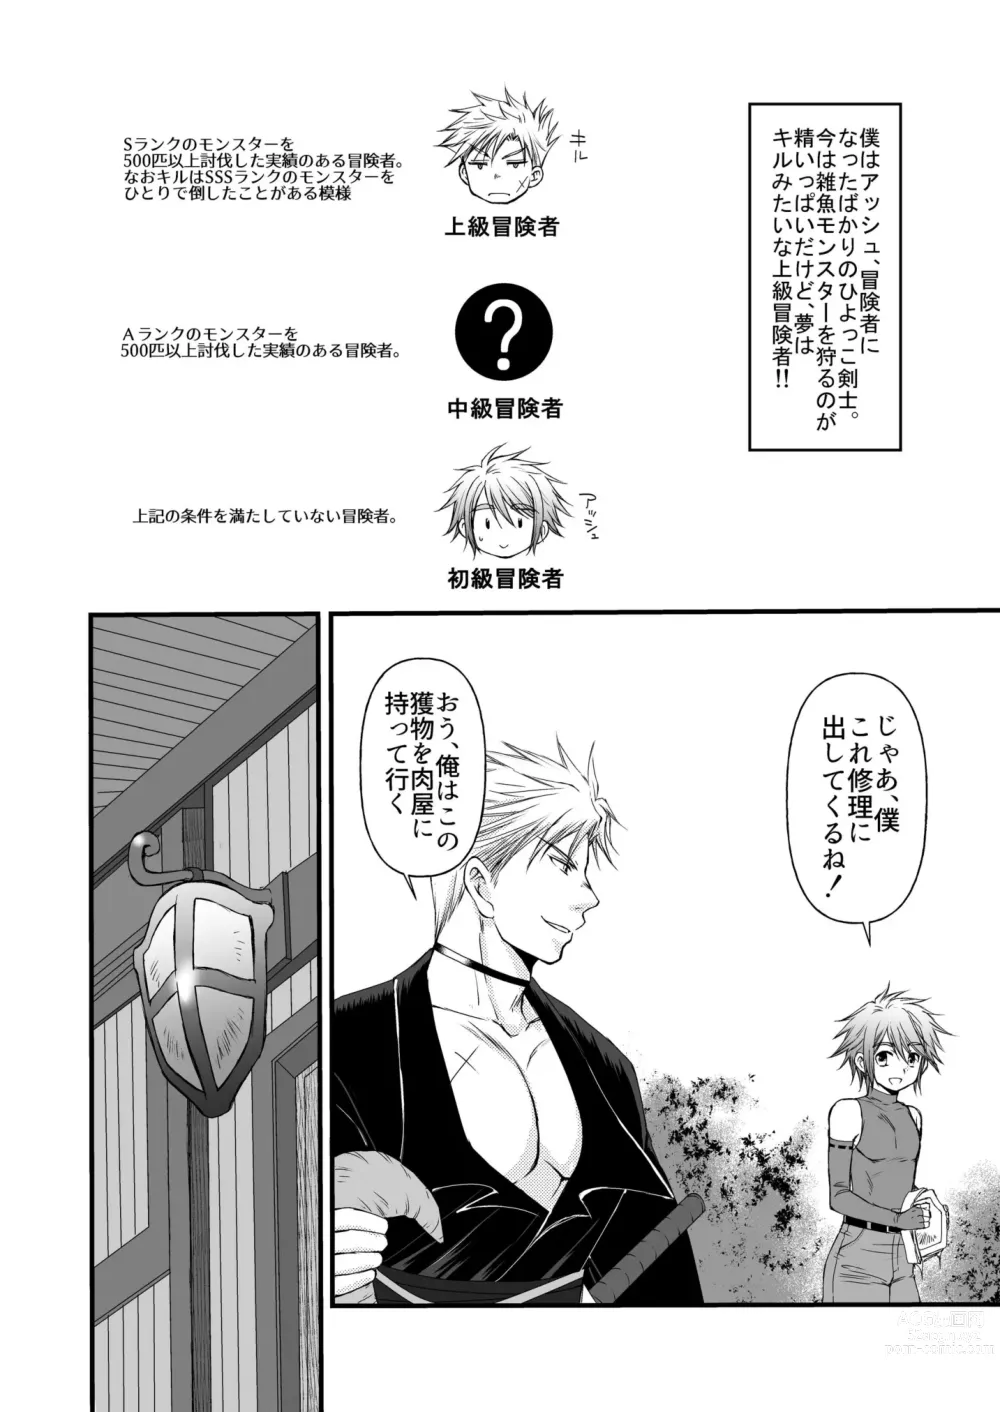 Page 4 of doujinshi Benshoushiro ga Tarinakute